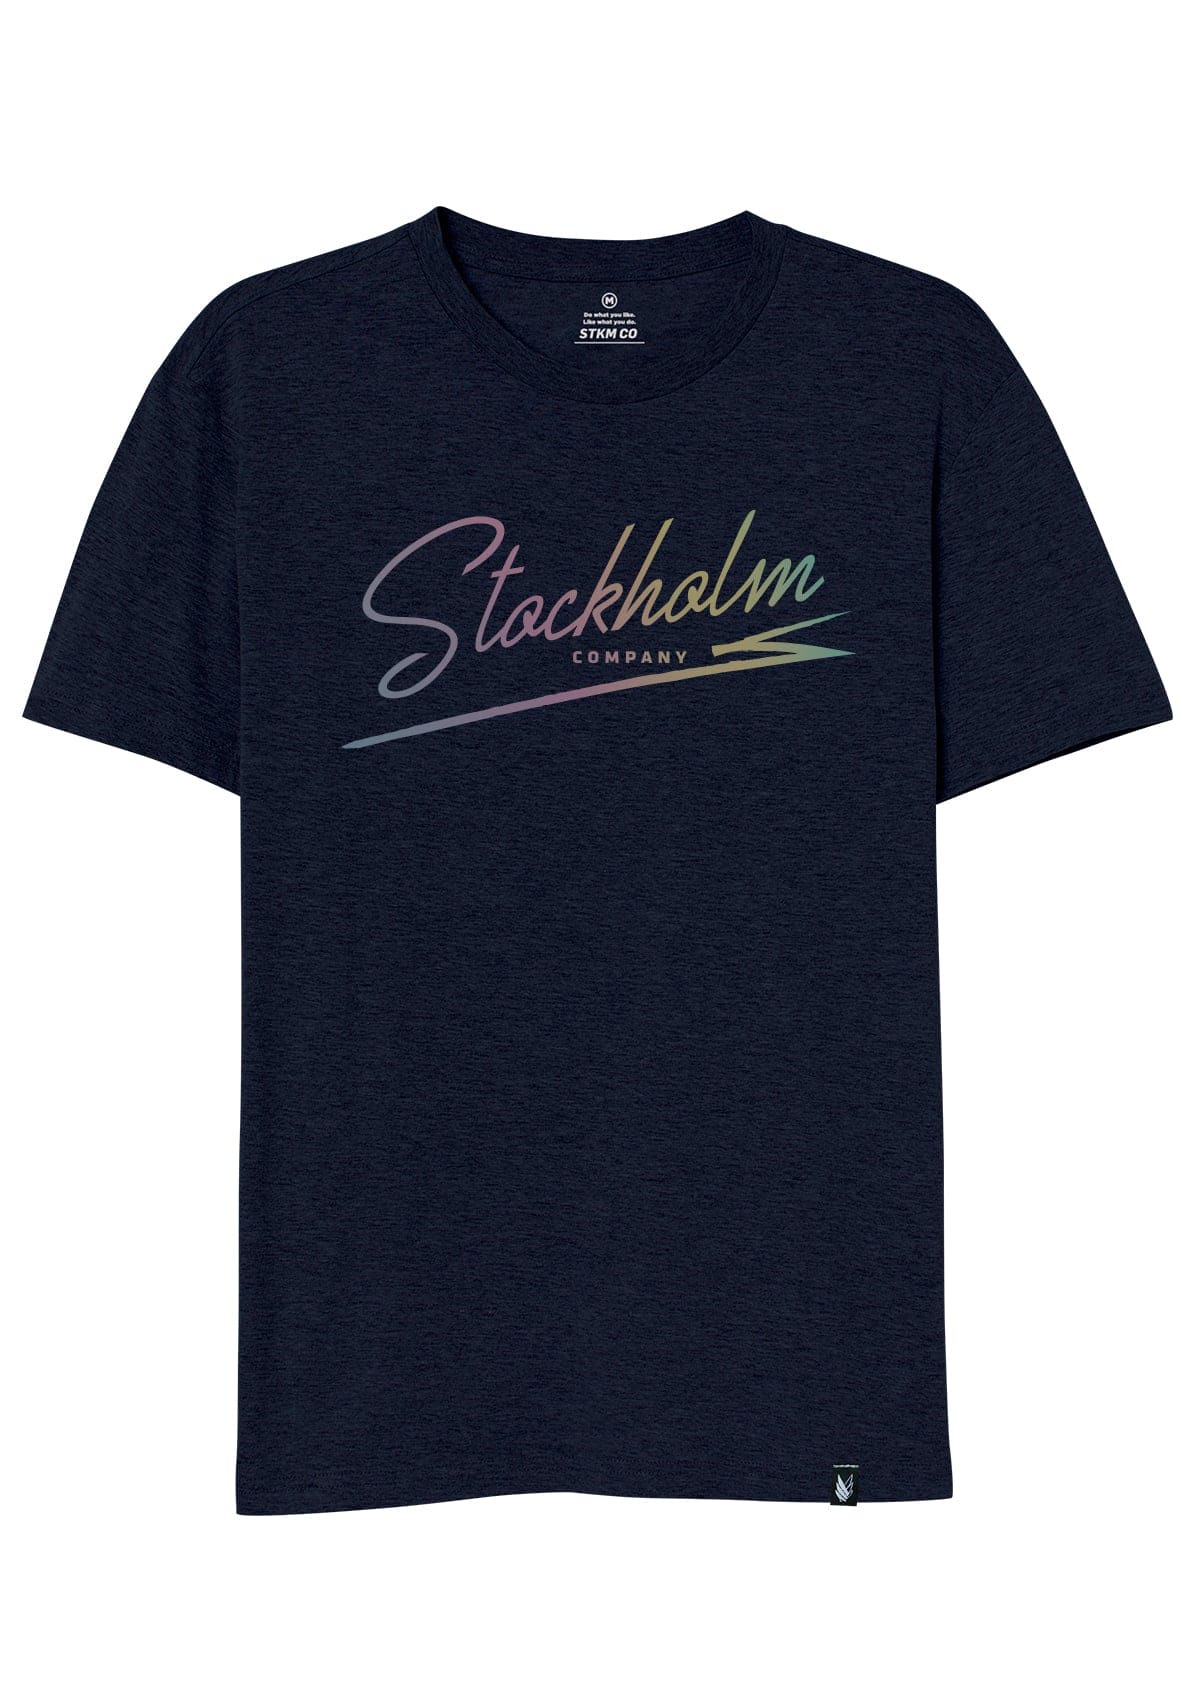 Stellar shine tee | hombre, Lo nuevo, playera, stkm originals, unisex | Stockholm Company